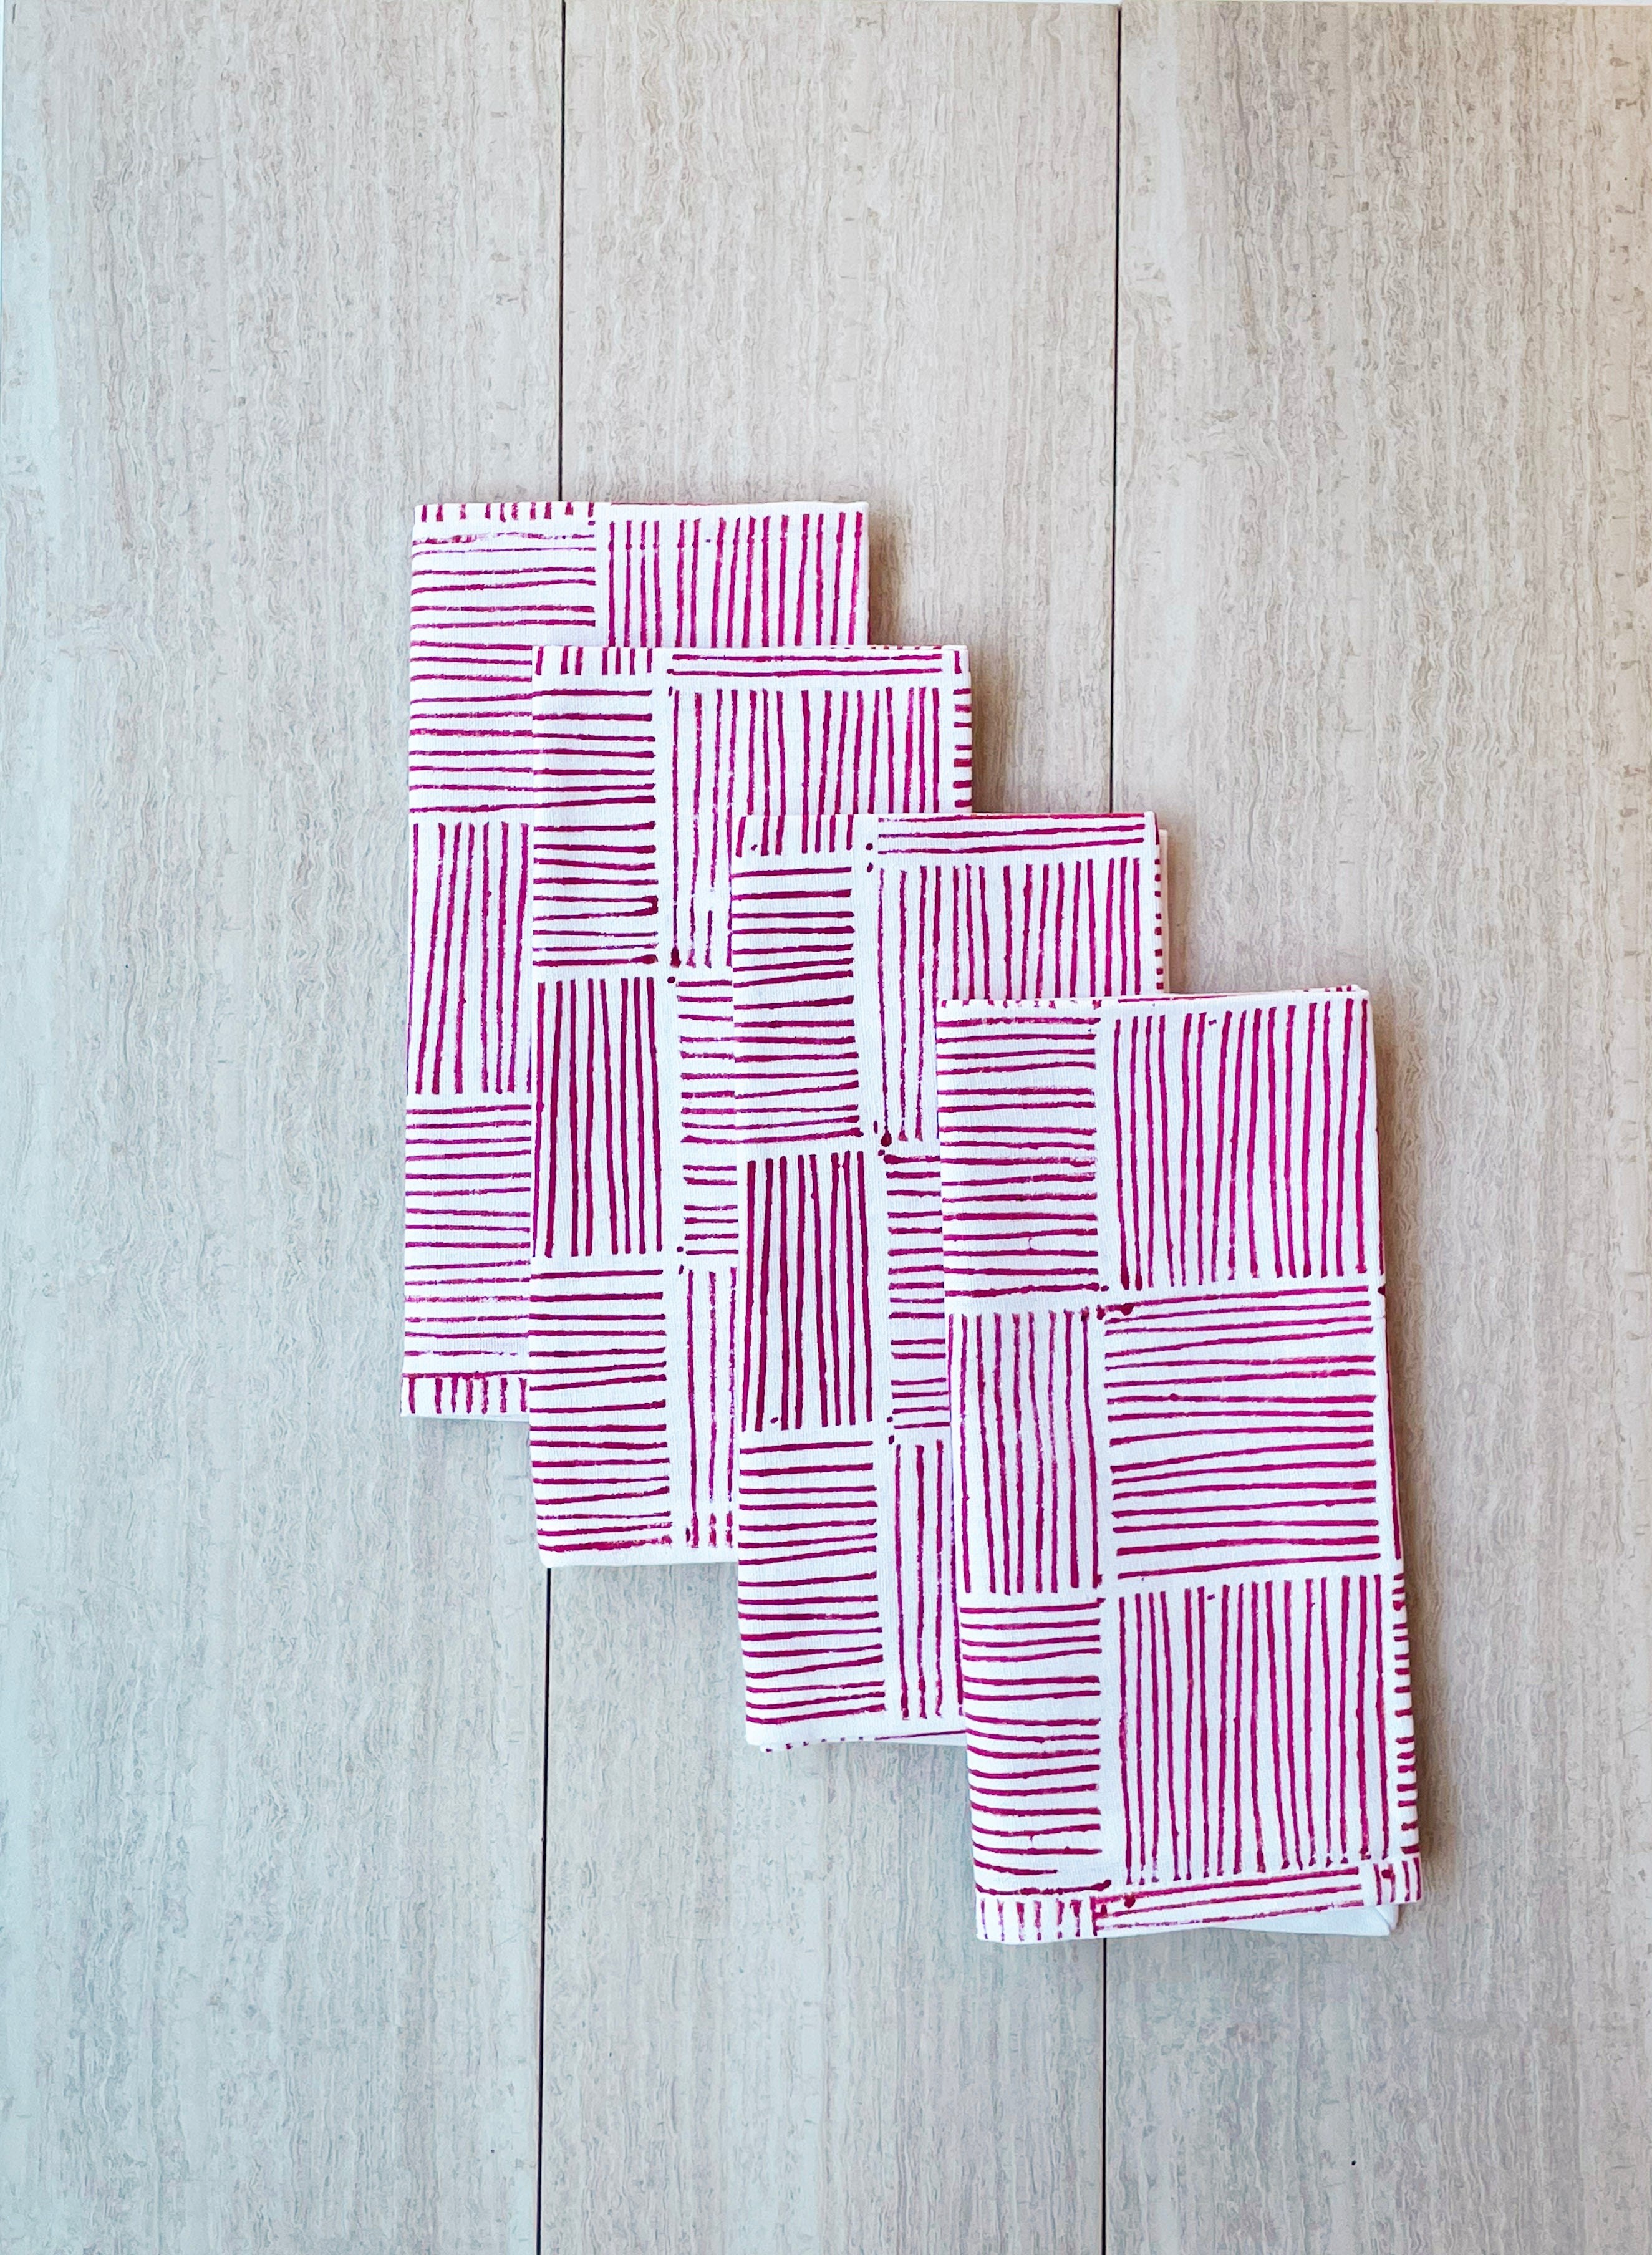 Dinner Napkins (set of 4) - Striped, Pink by Mended